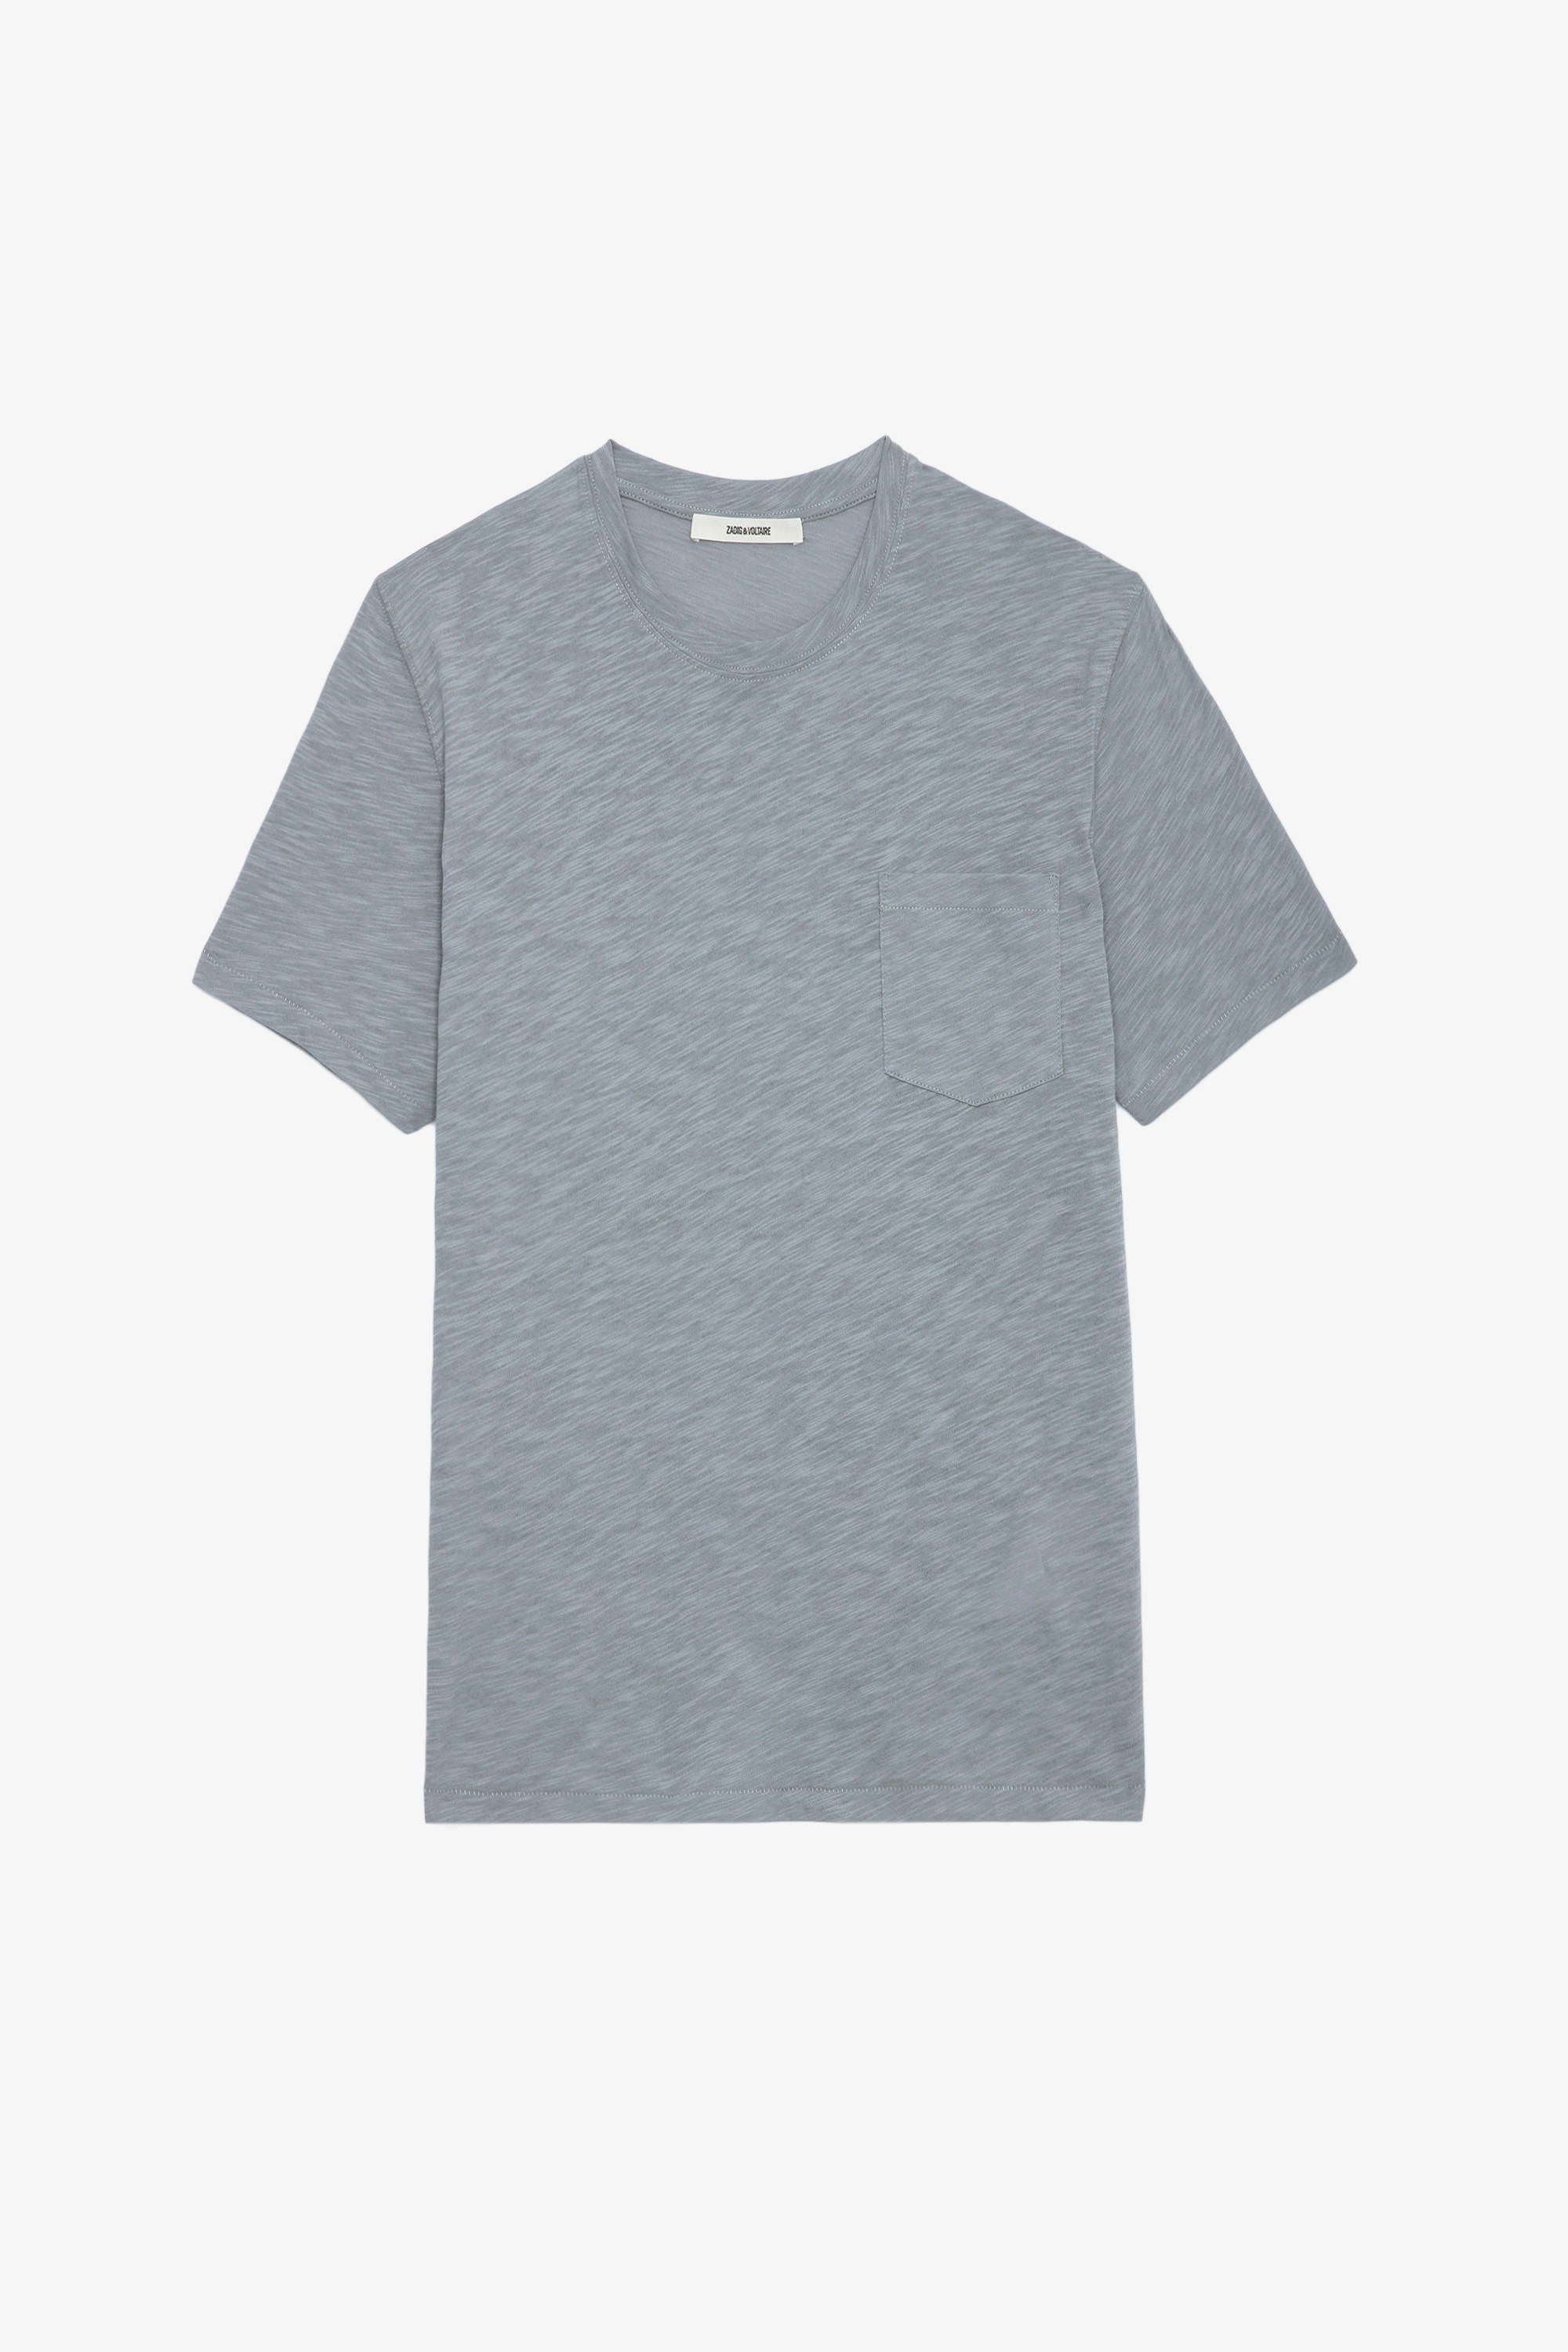 Stockholm Slub T-shirt - Grey slub cotton short-sleeved T-shirt with pocket and Skull Block motif on the back.